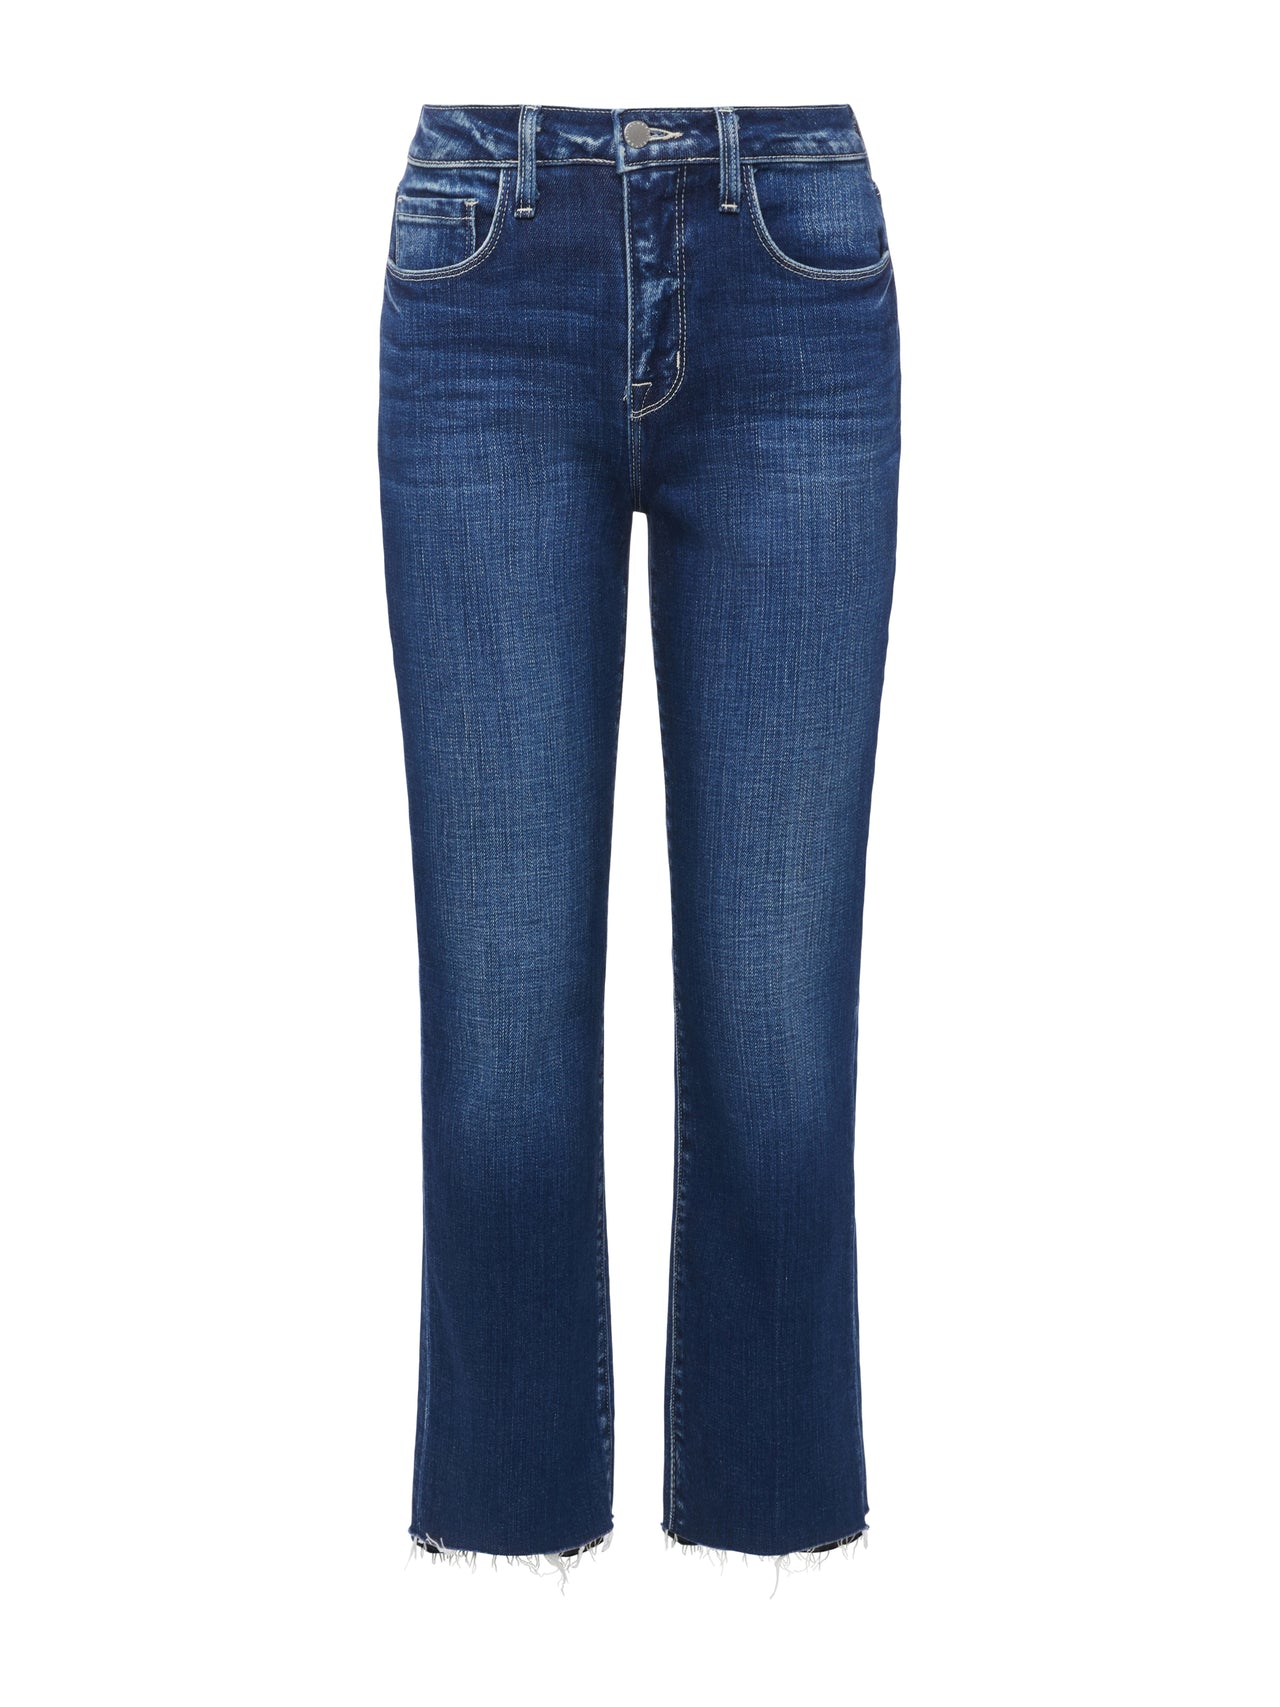 L'AGENCE - Women's Jeans & Denim Collection | Official Site